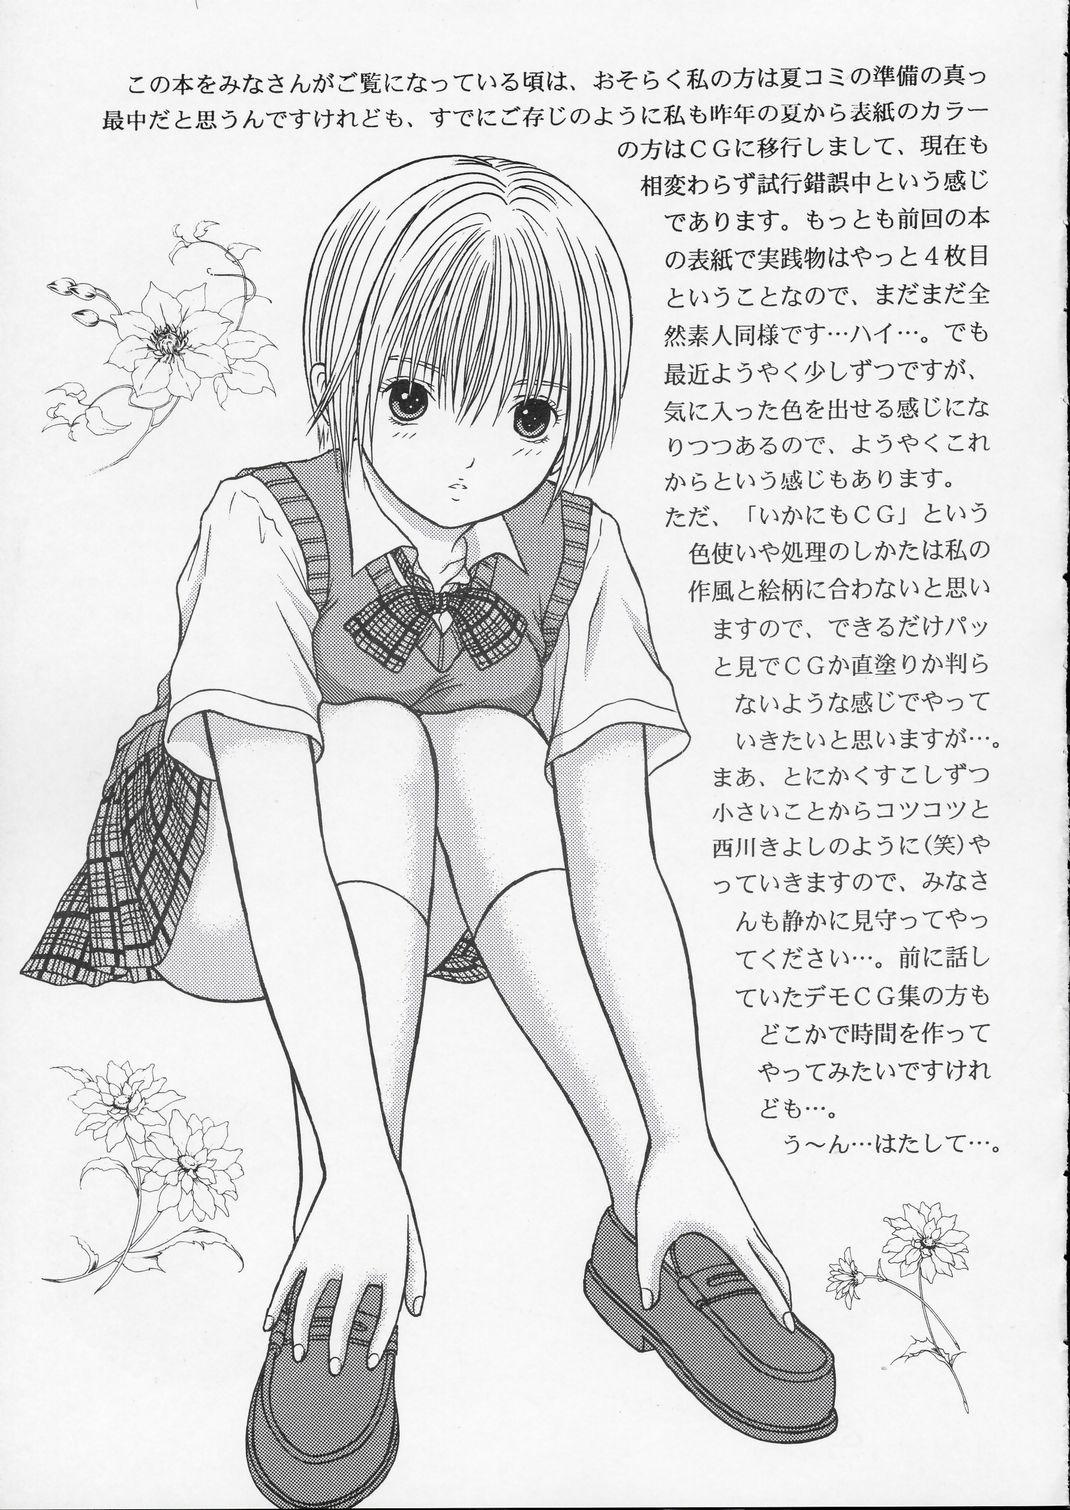 Girlongirl ICHIGO∞% EXTRA TRACK -1 - Ichigo 100 Morena - Page 4